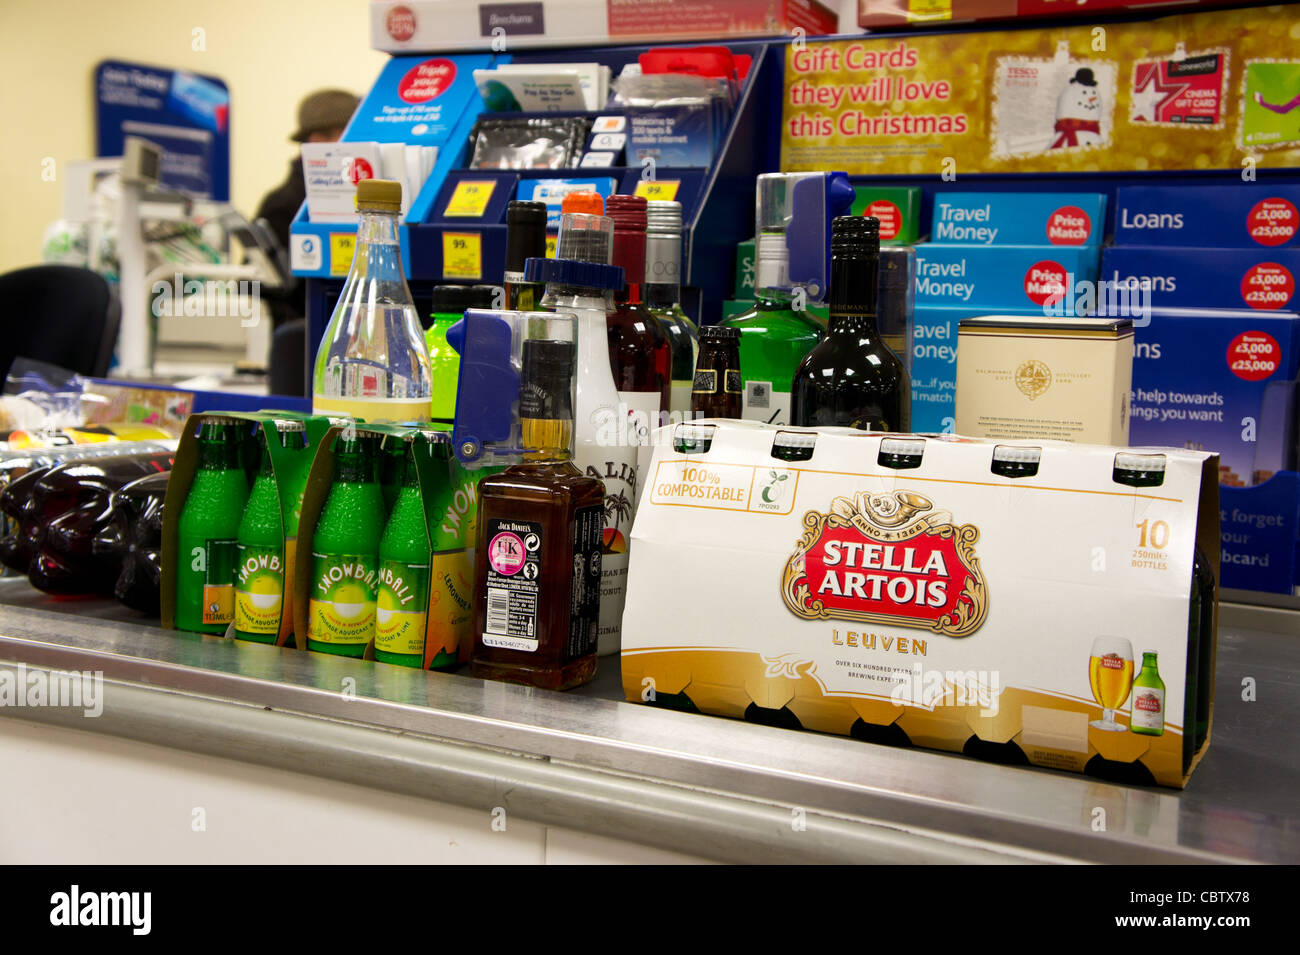 Lotes de alcohol en el supermercado Tesco en el check-out, UK Foto de stock